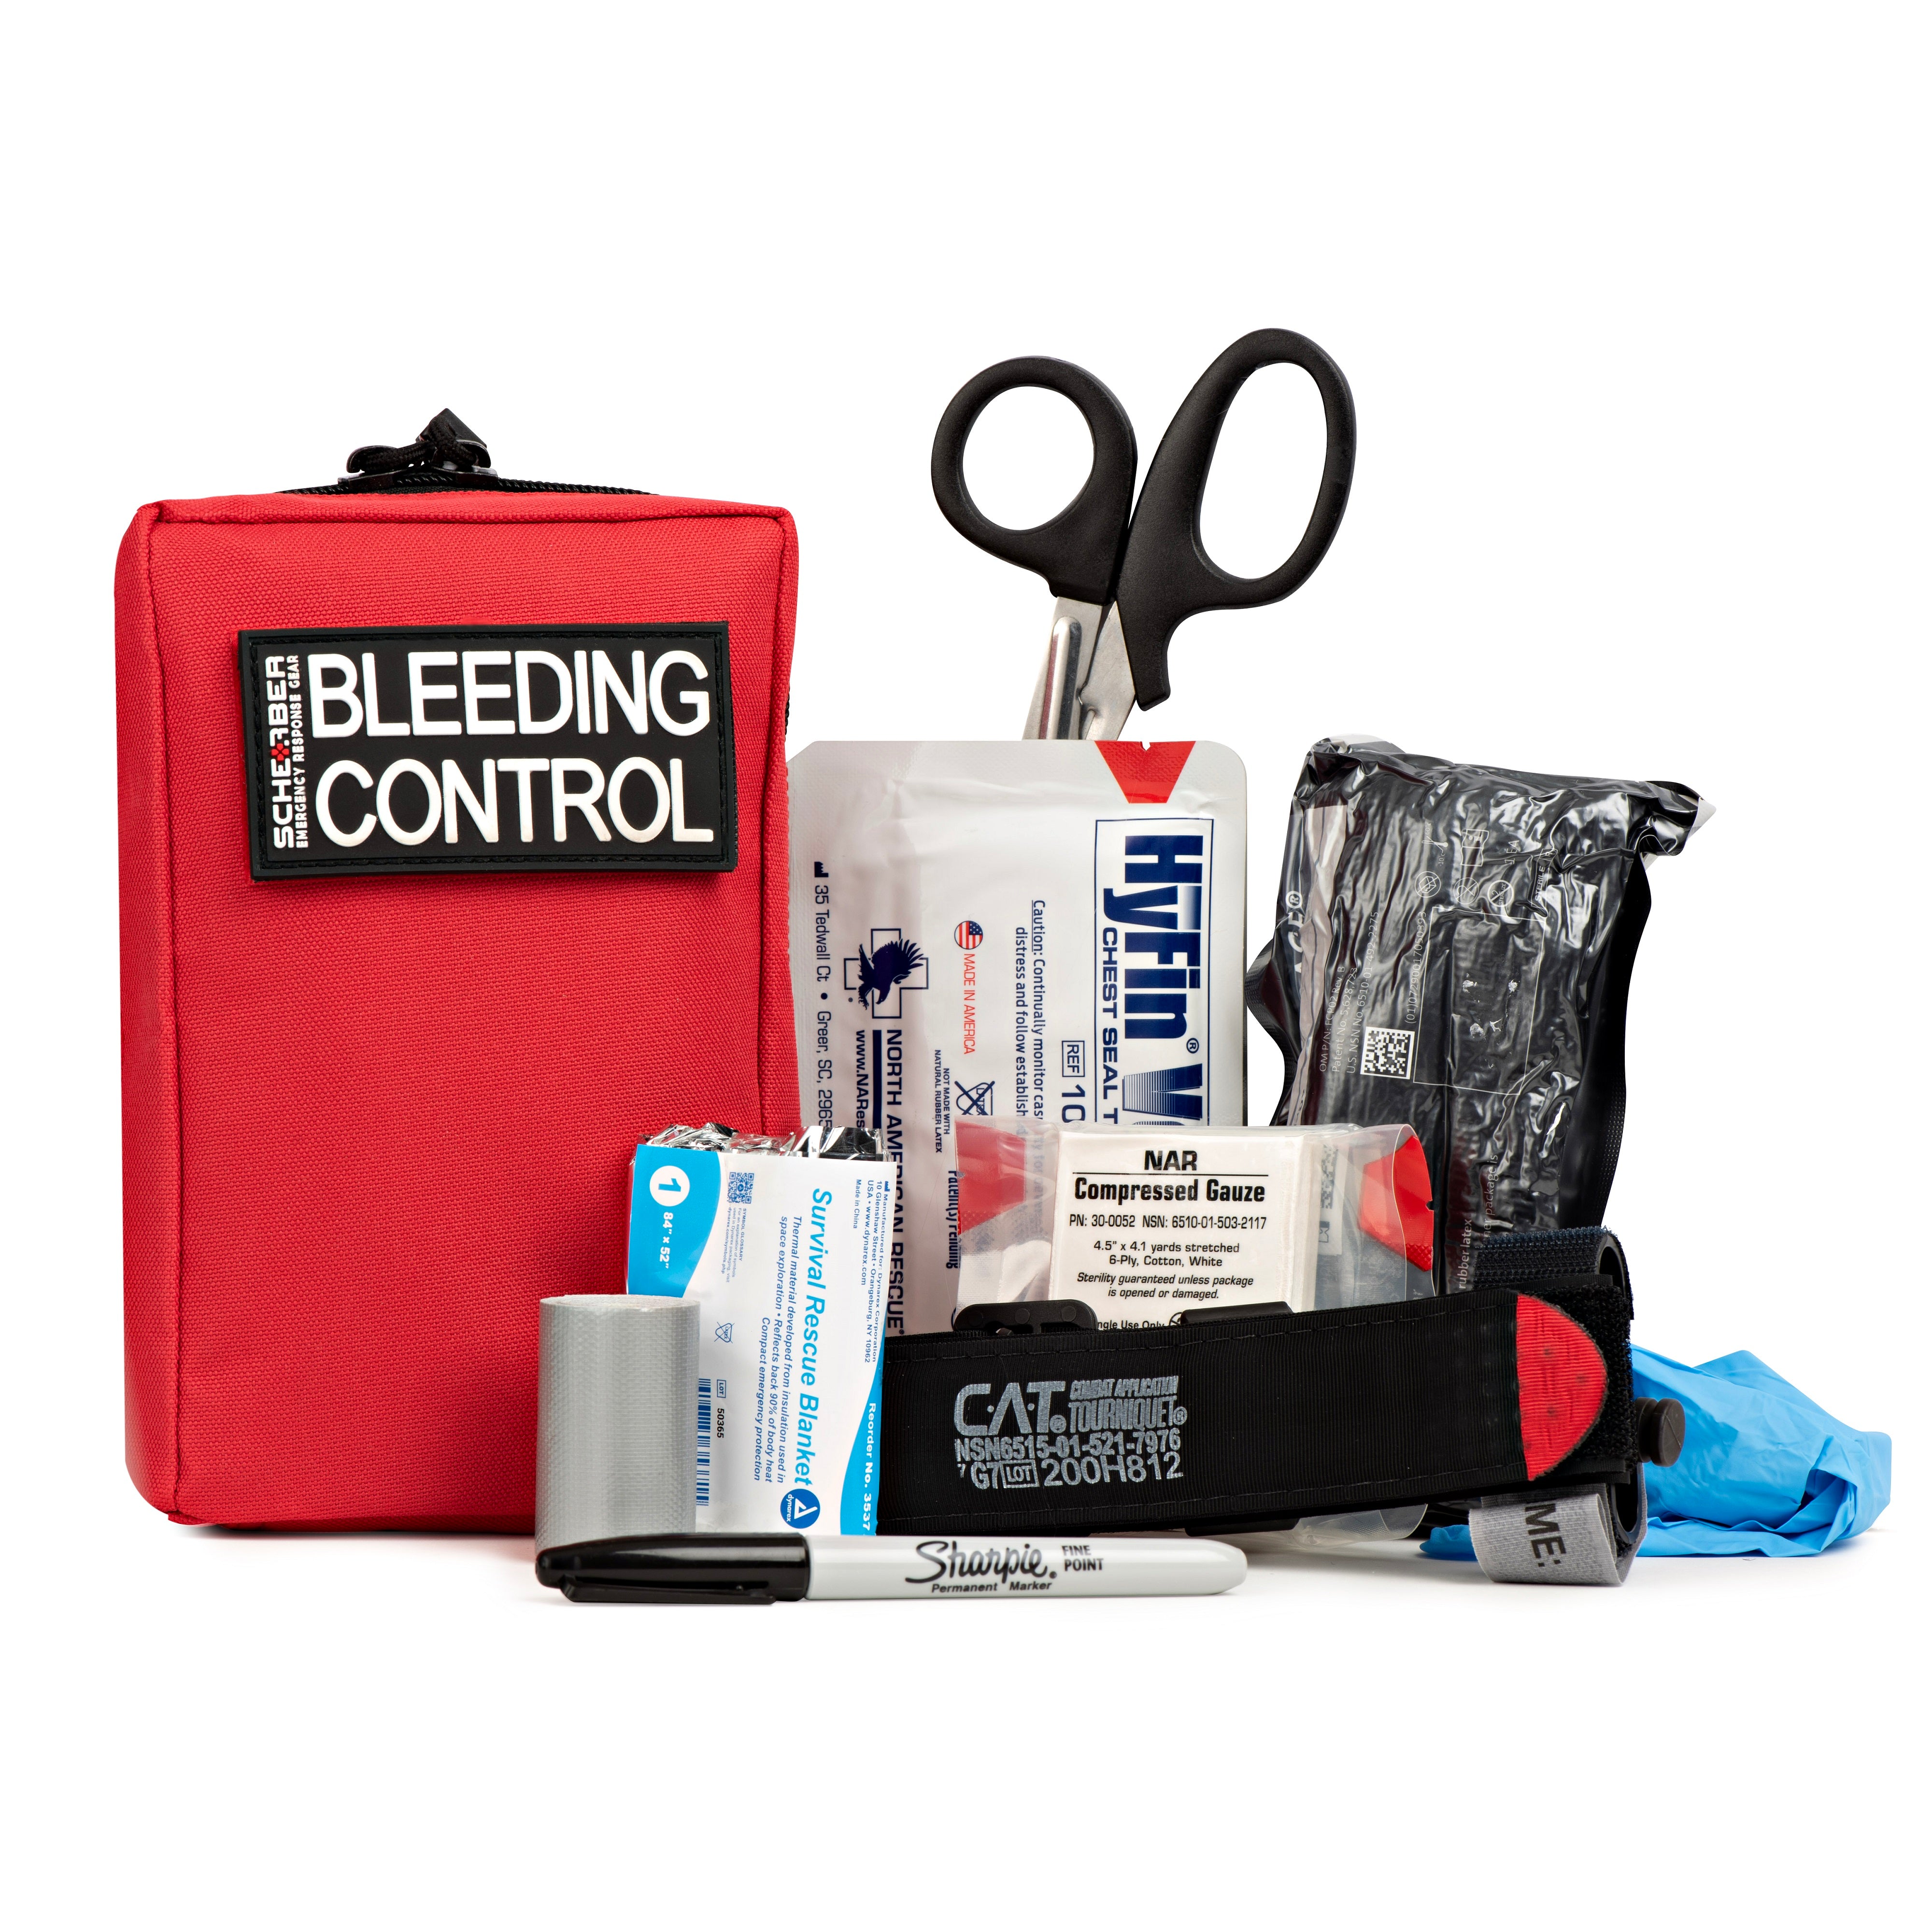 Scherber Public Access Bleeding Control Kit | Trauma Equipment, First Aid Supplies | Medium